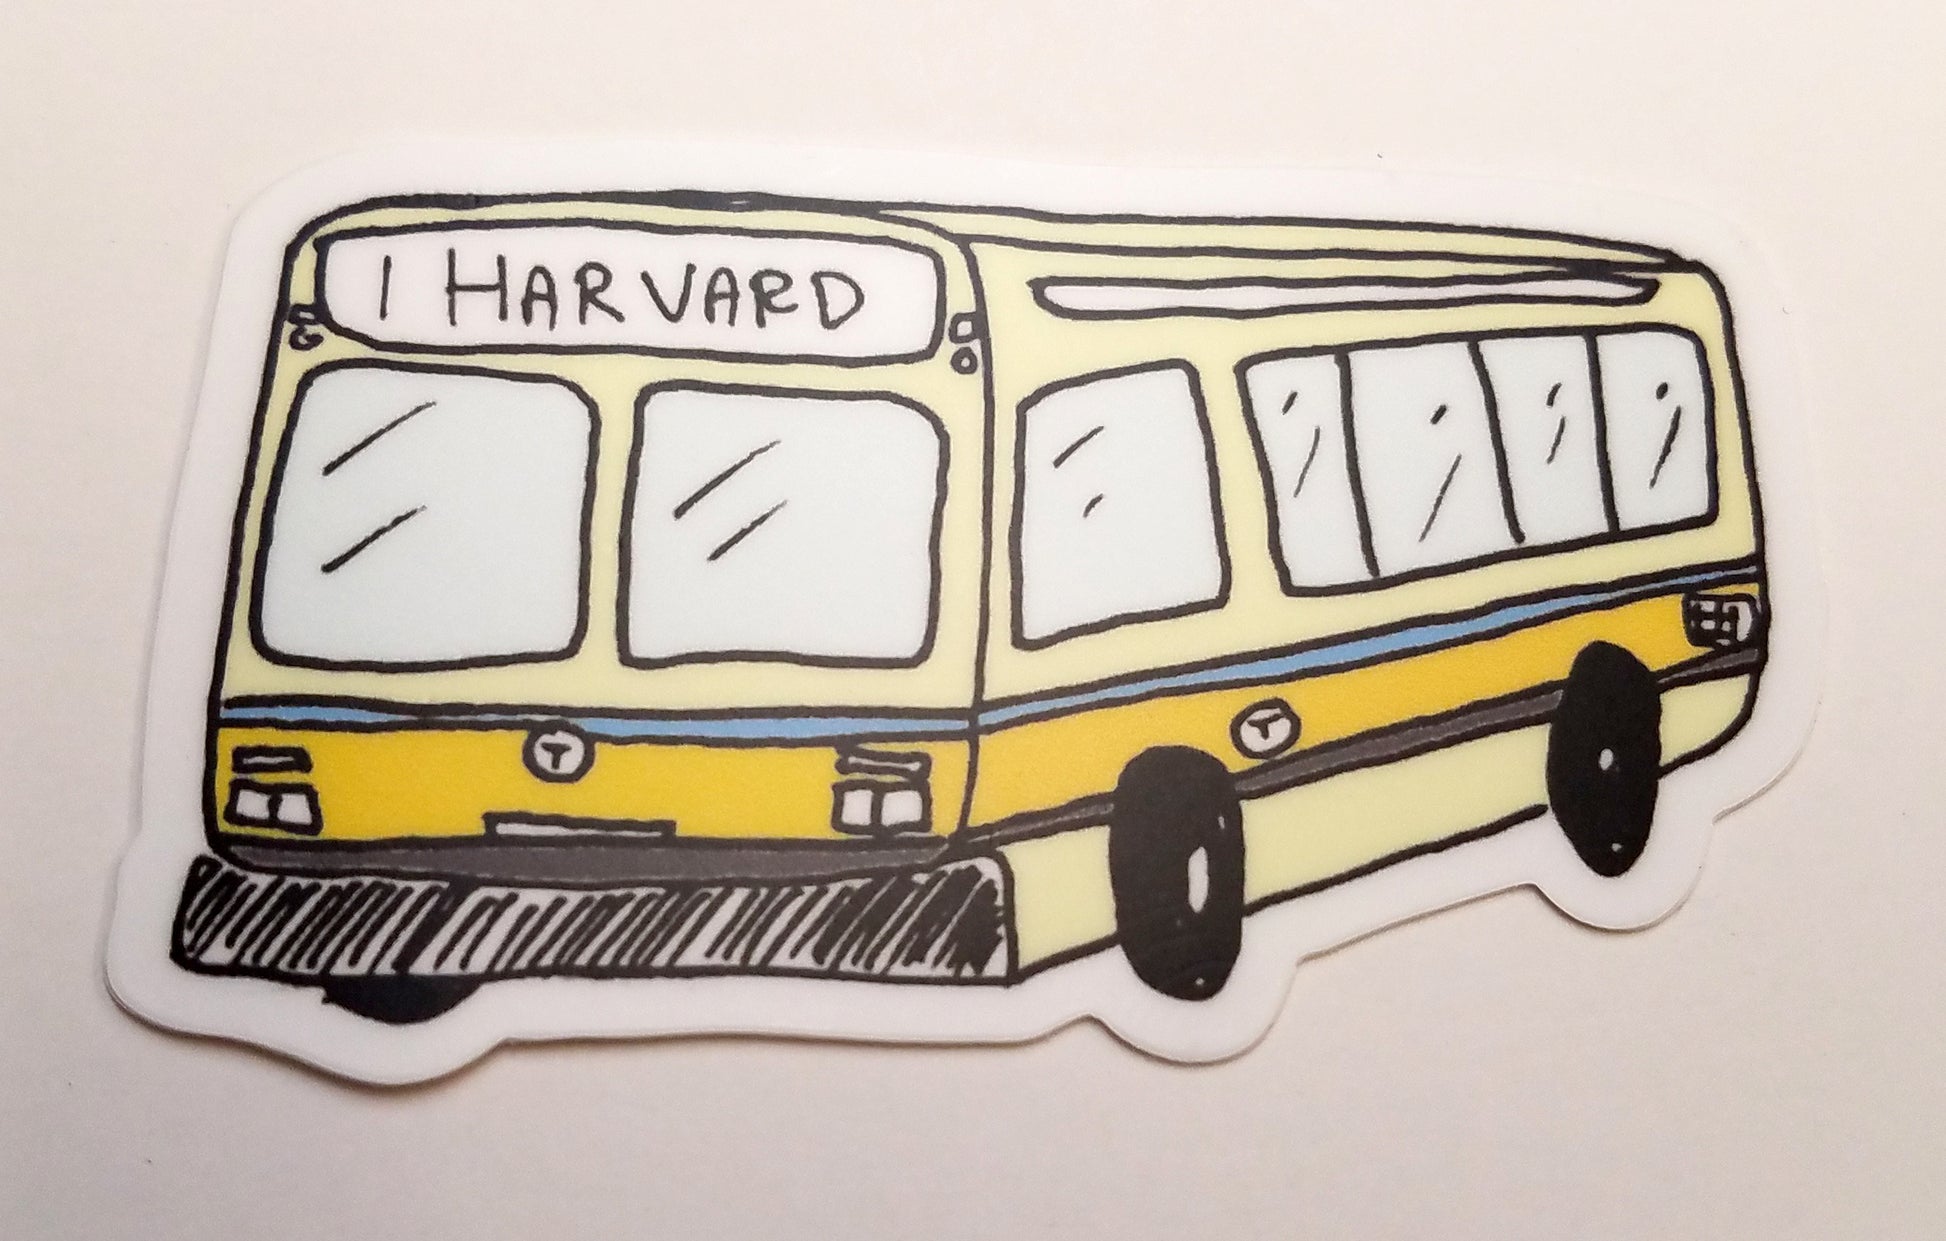 MBTA Bus Sticker: 1 Harvard